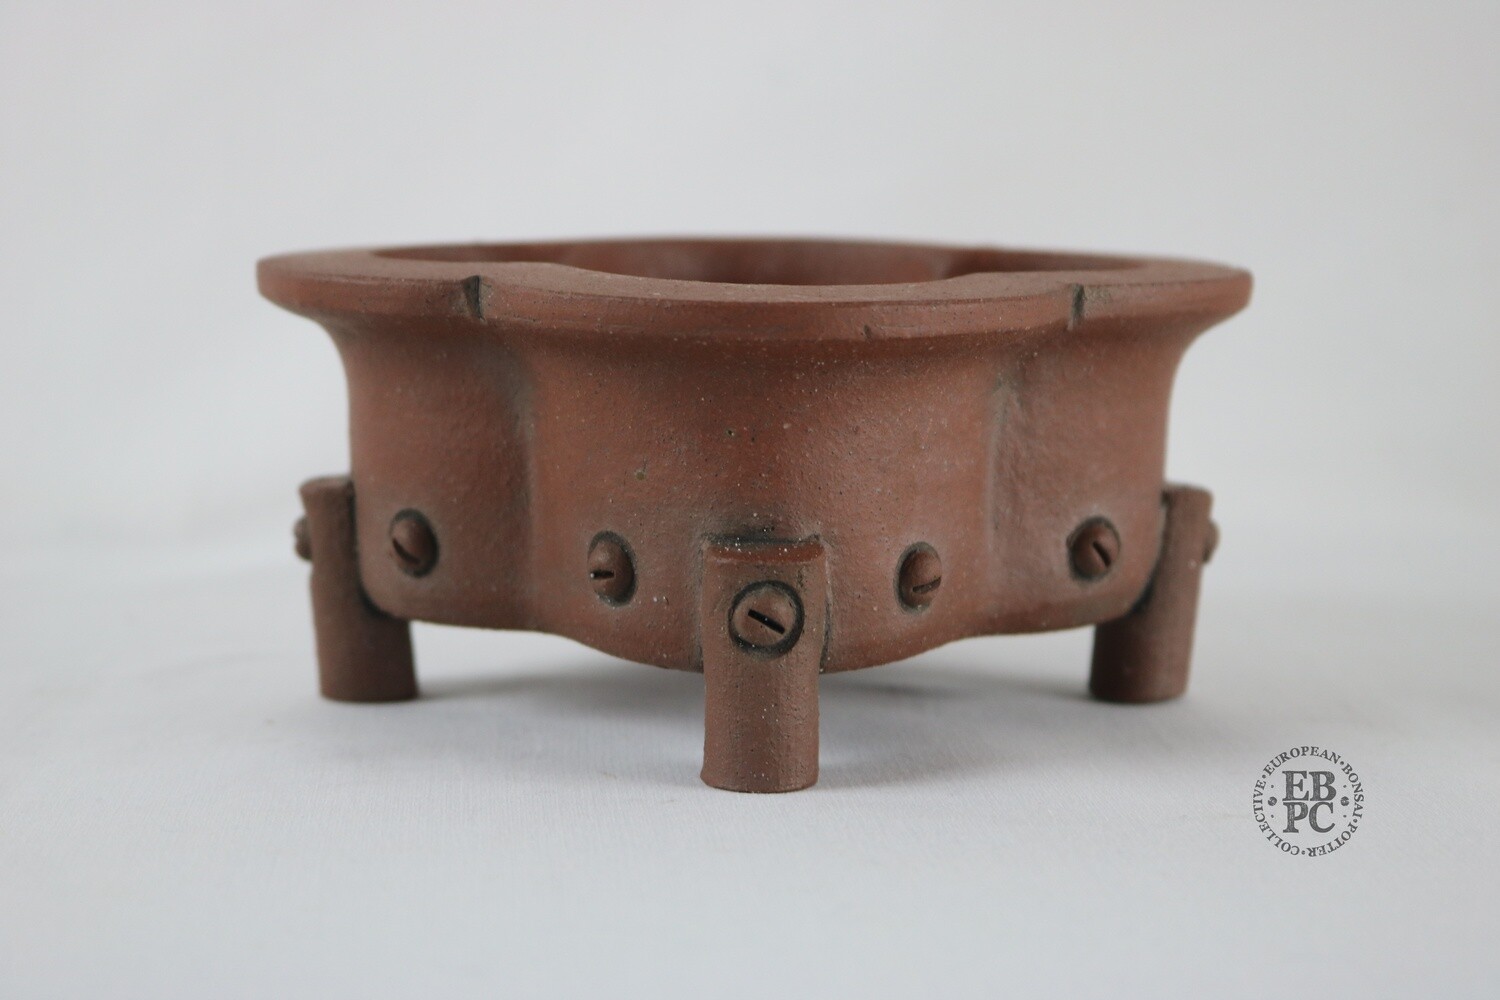 Stone Monkey Ceramics - 14.1cm; Shohin Pot; 'Tubular Mokko' Design; Unglazed; Reddish Clay; Feature Screw Details; EBPC Stamped; Andrew Pearson